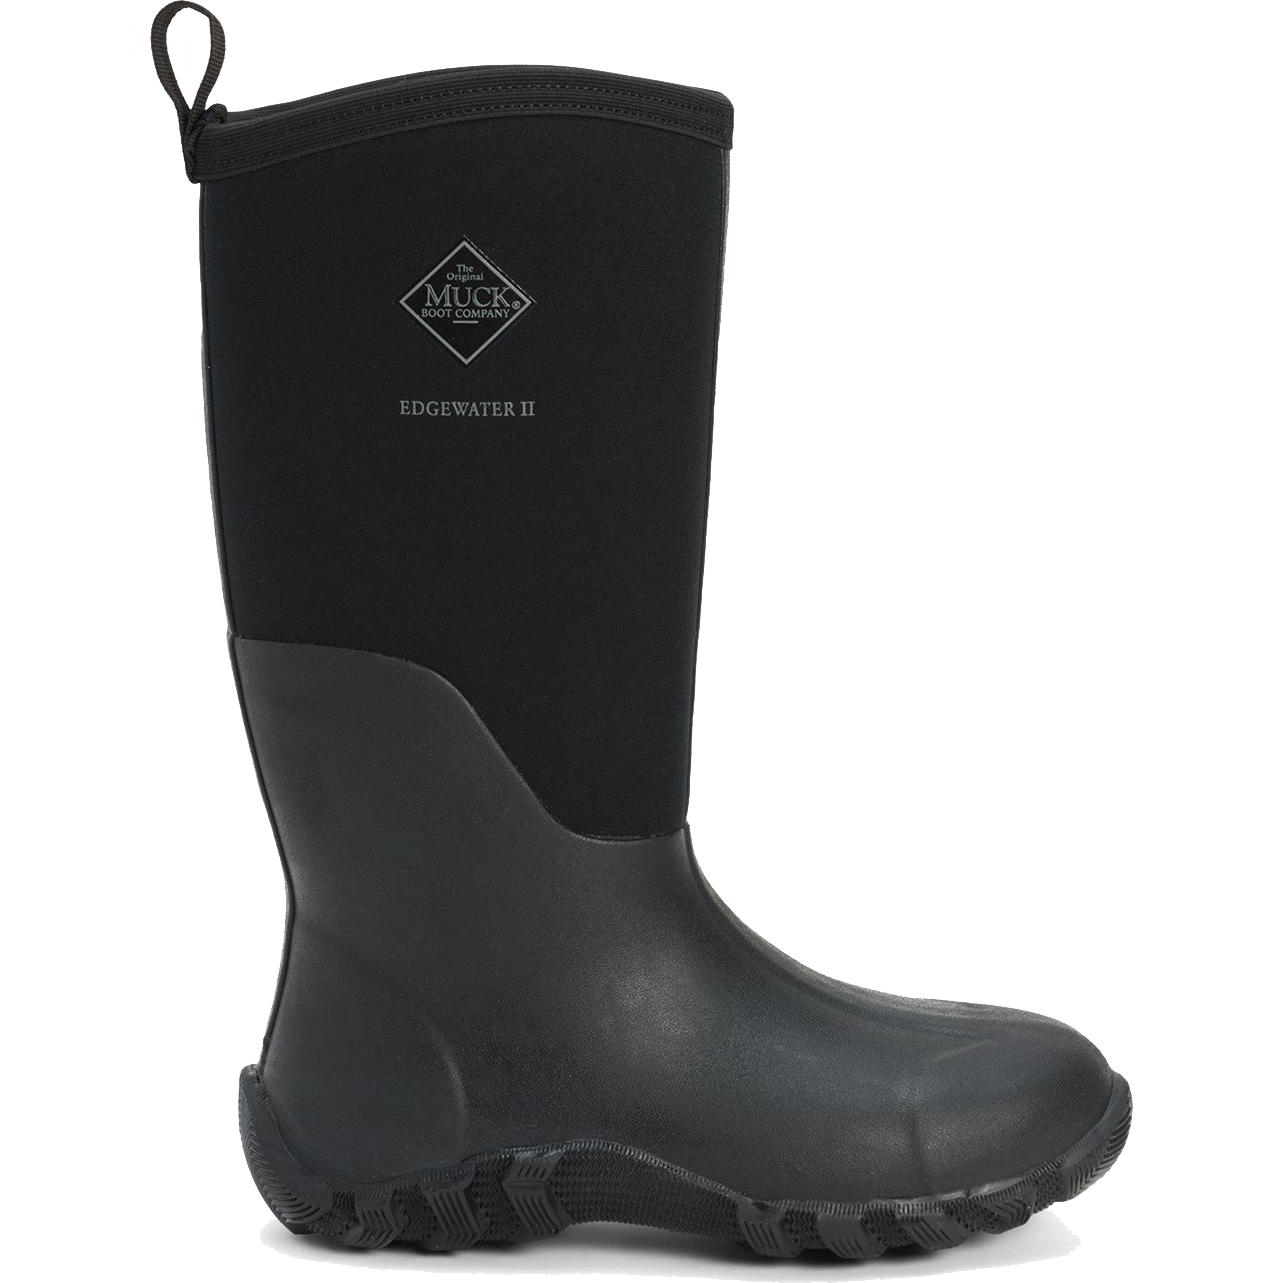 Muck Boots Men's Edgewater II Neoprene Wellies Rain Boots - UK 7